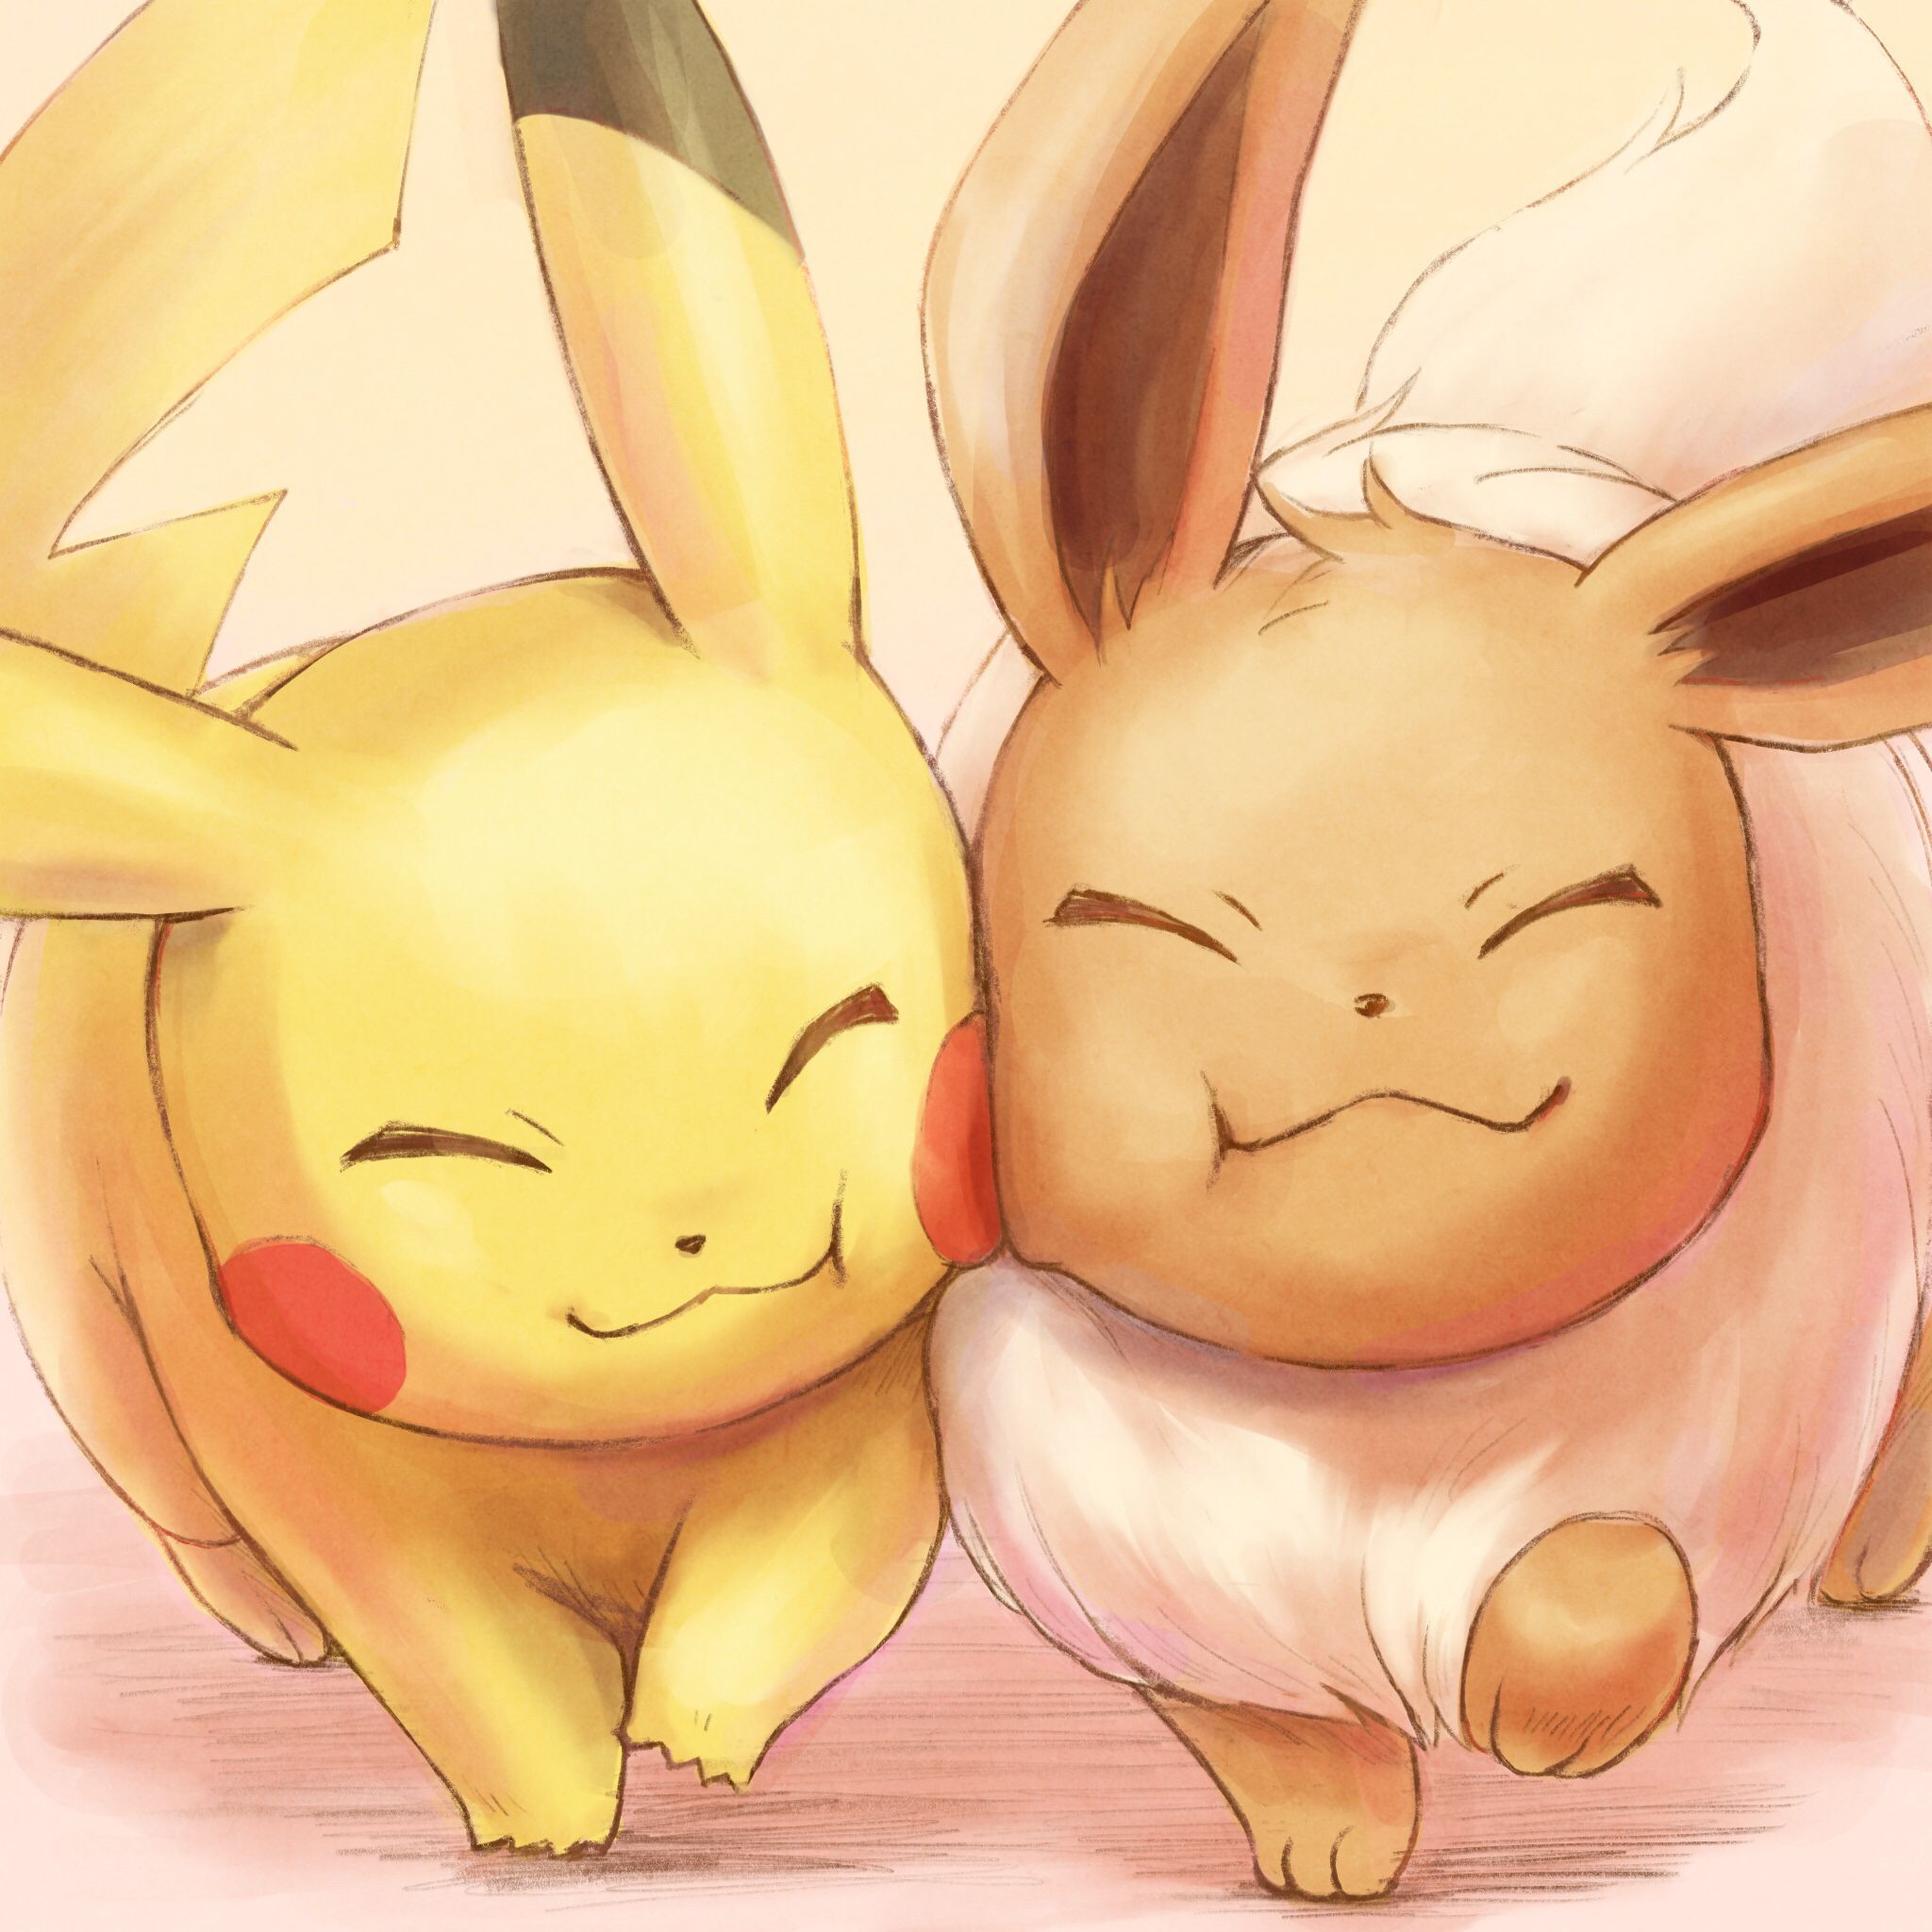 Pixiv Id 1191319. Pokémon: Let's Go Pikachu & Let's Go Eevee. Eevee. Pikachu. Dibujos bonitos de animales, Imagenes de pokemon pikachu, Dibujos bonitos